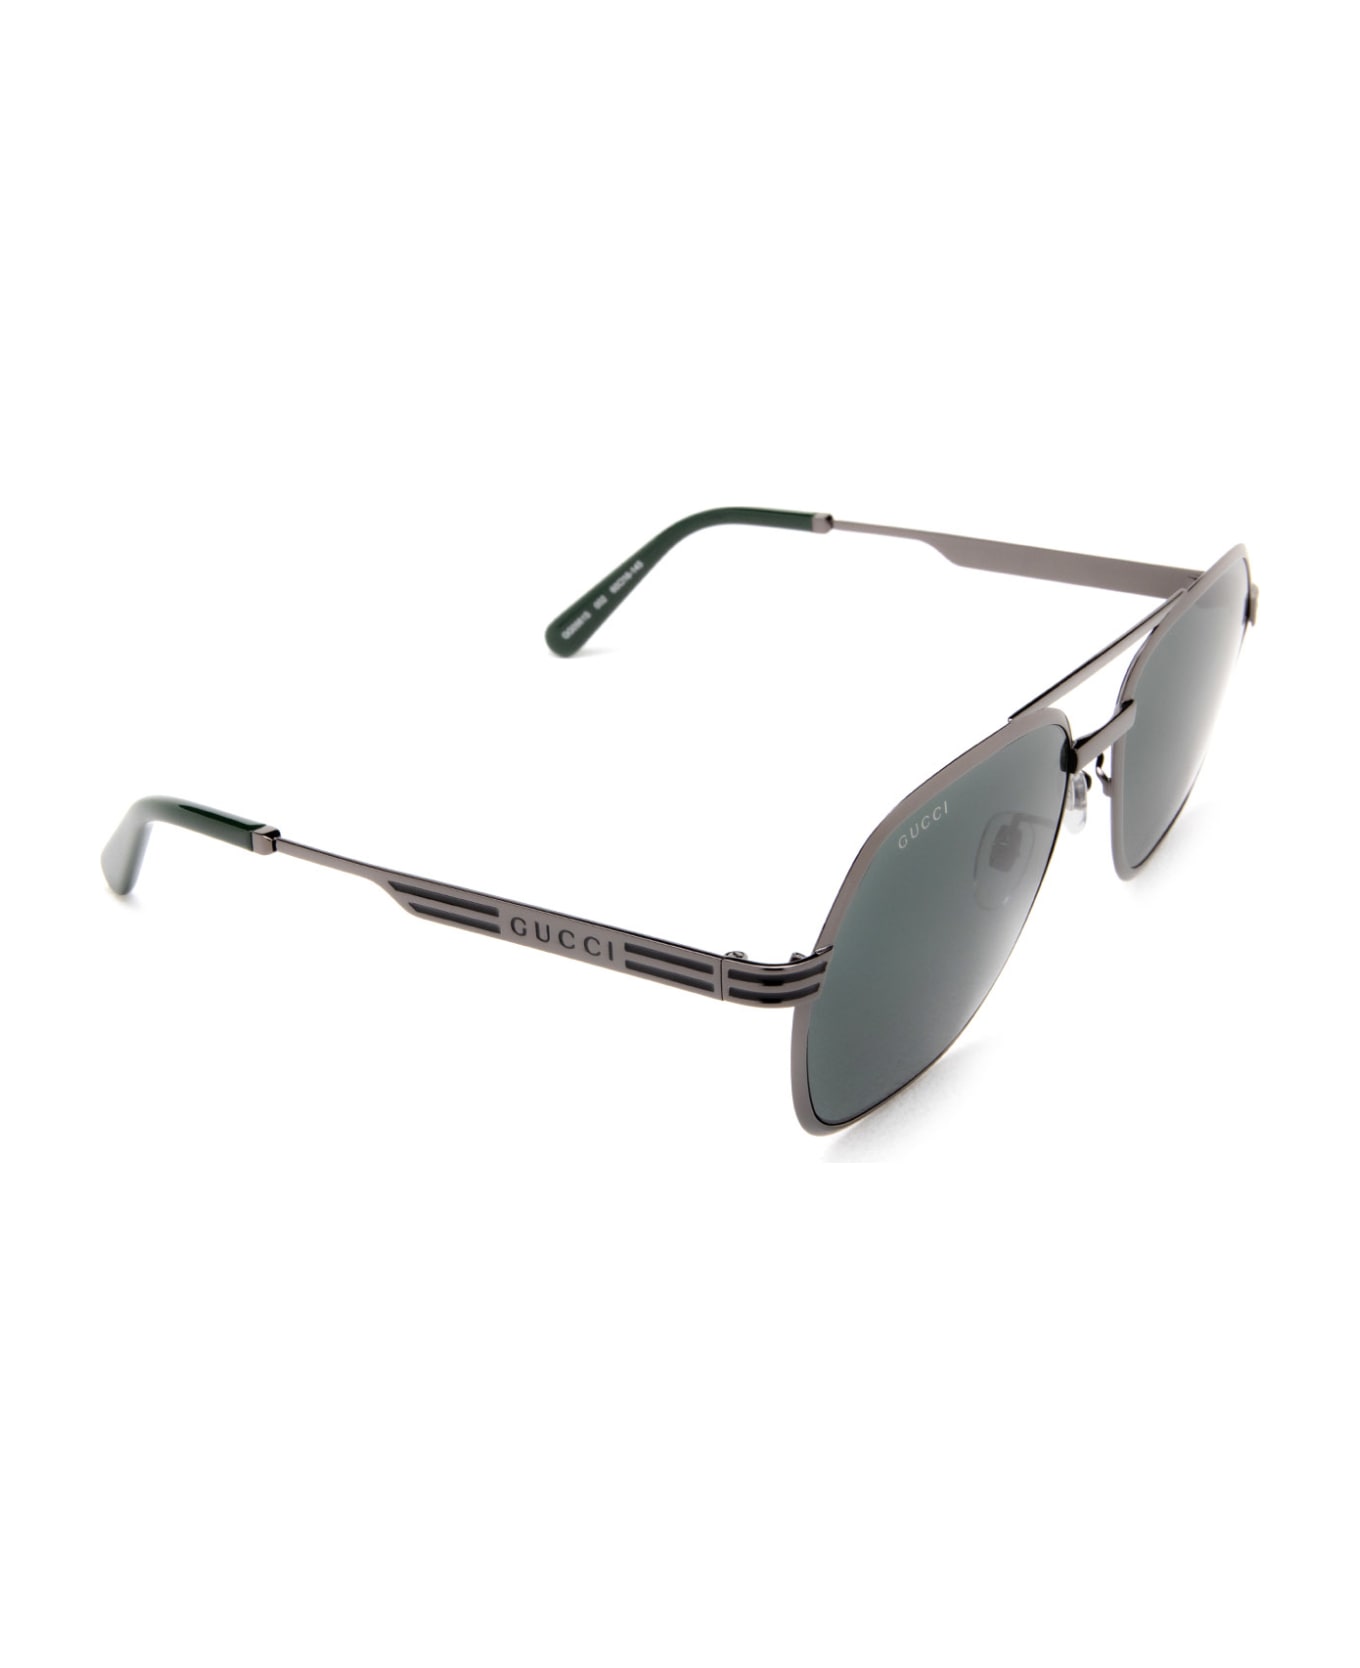 Gucci Eyewear Gg0981s Ruthenium Sunglasses - Ruthenium